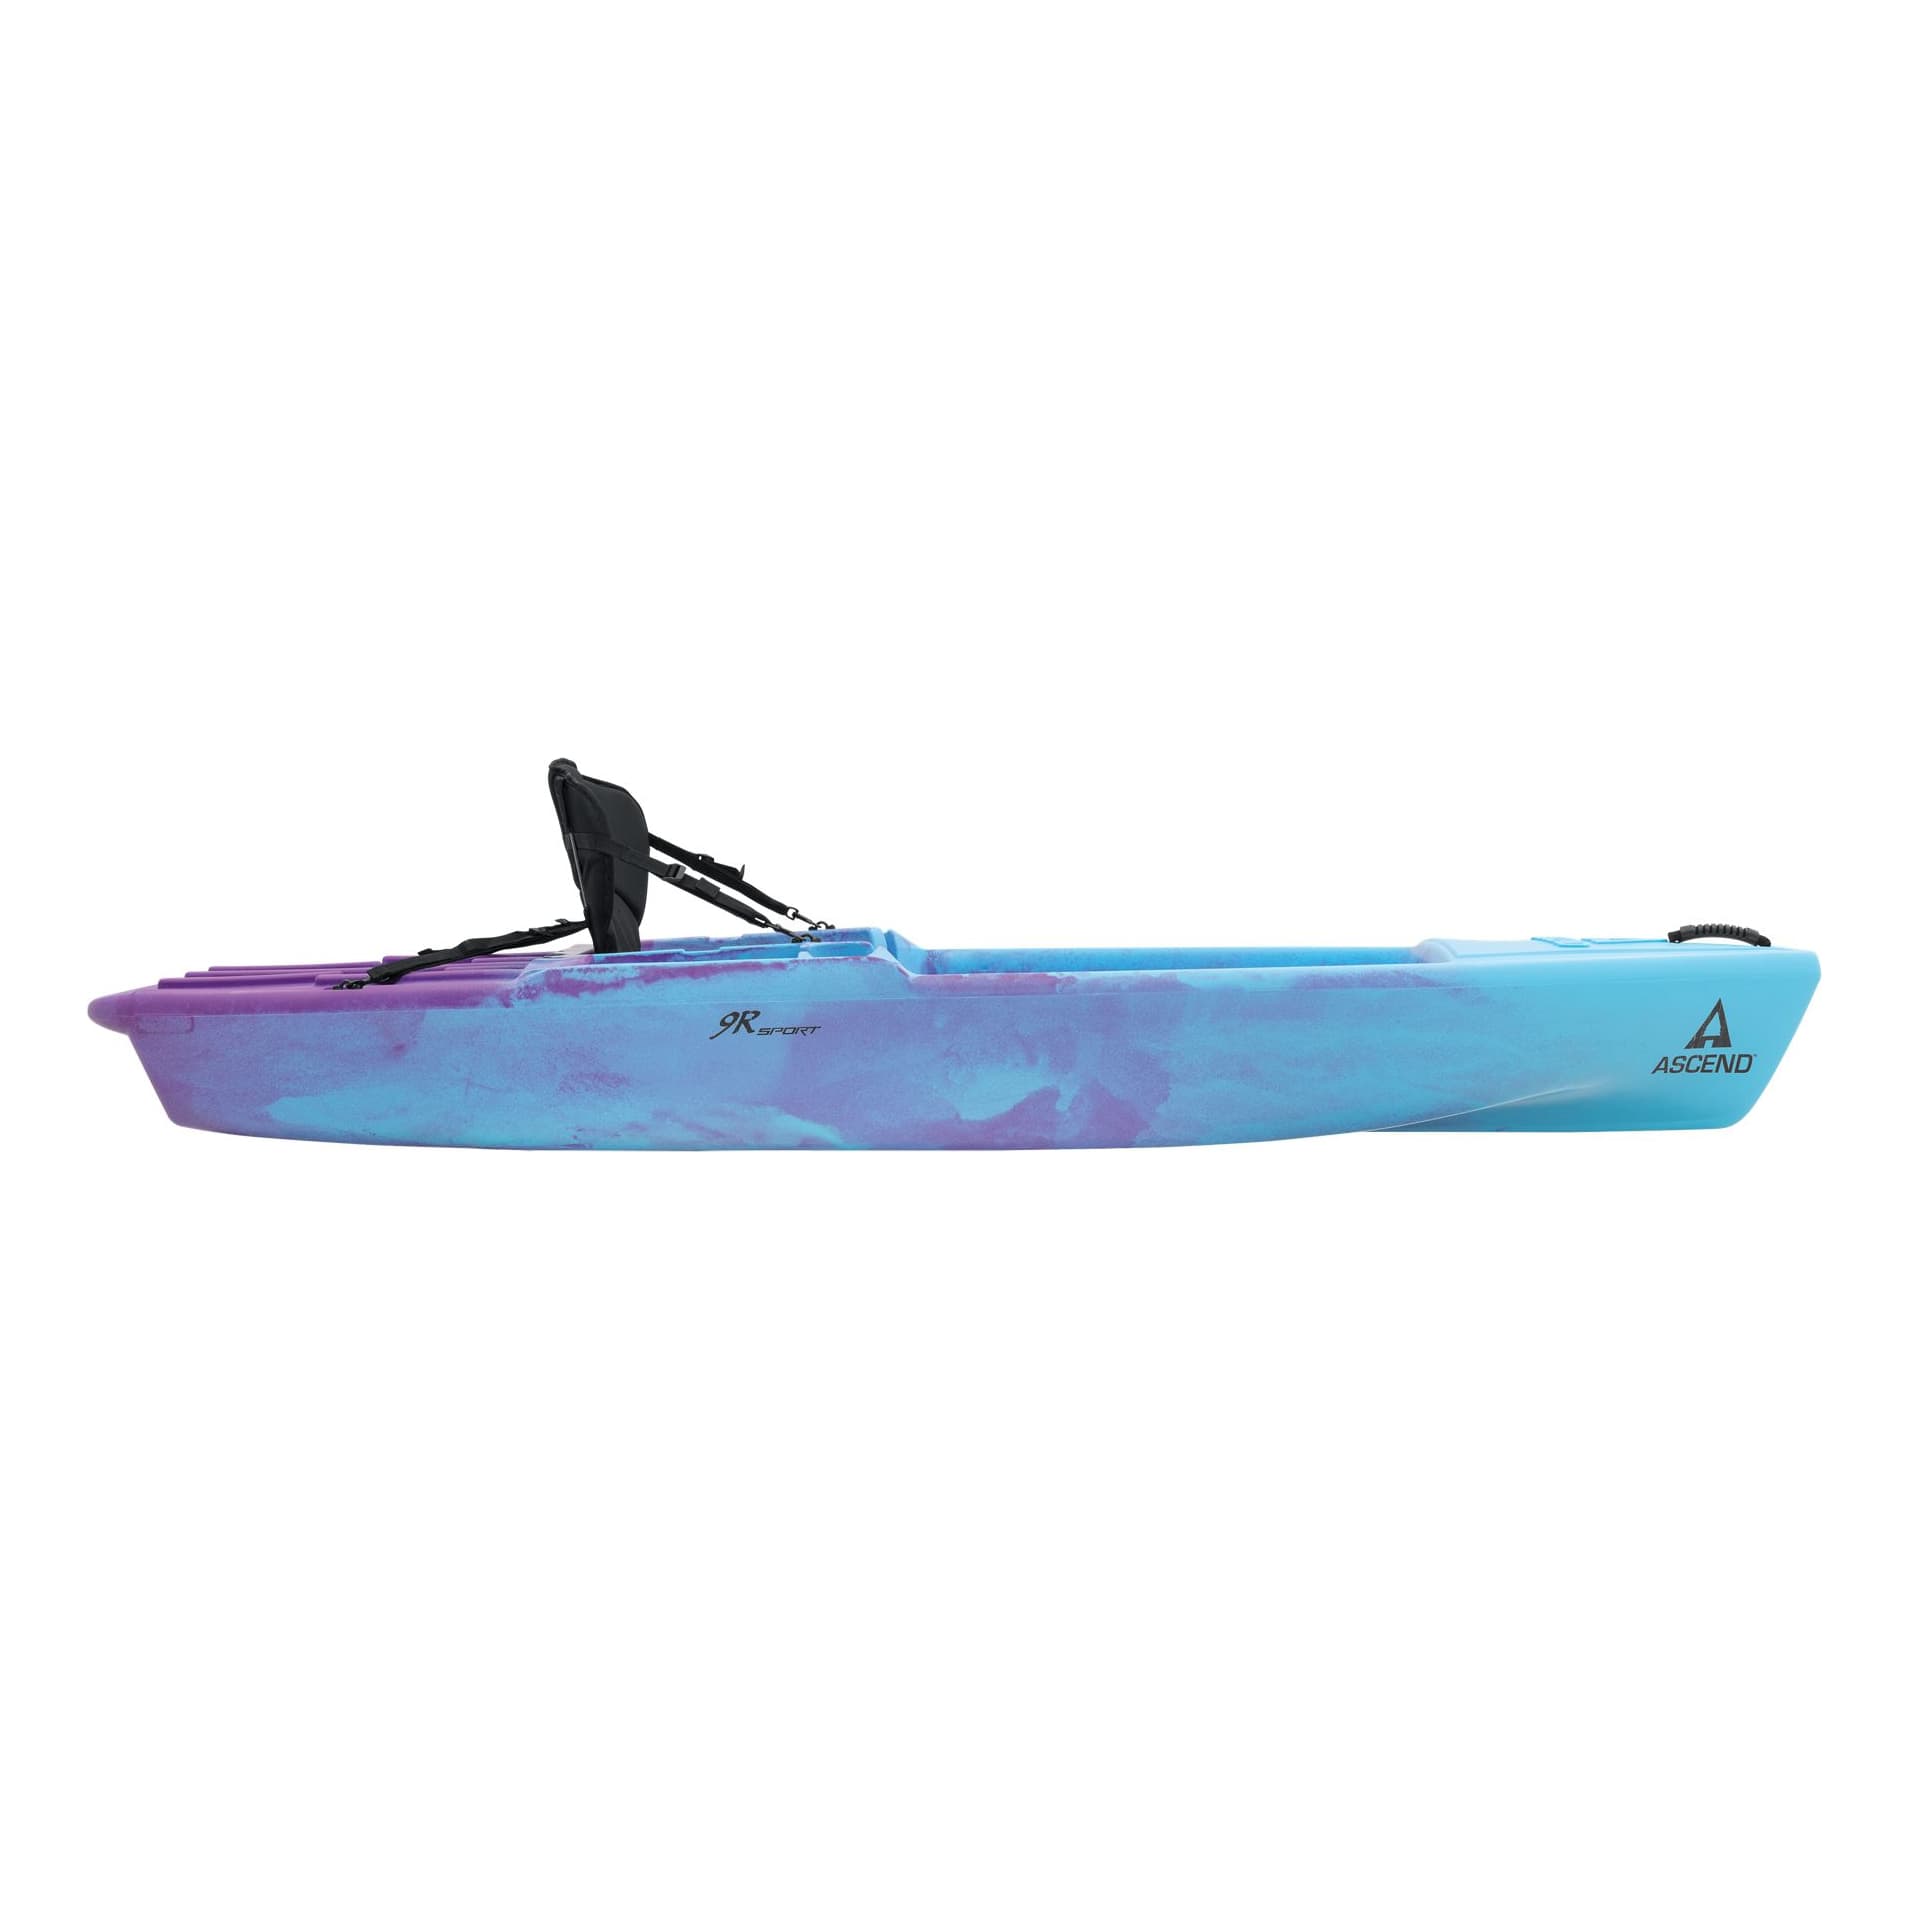 Ascend 9R Sport Sit-On-Top Kayak